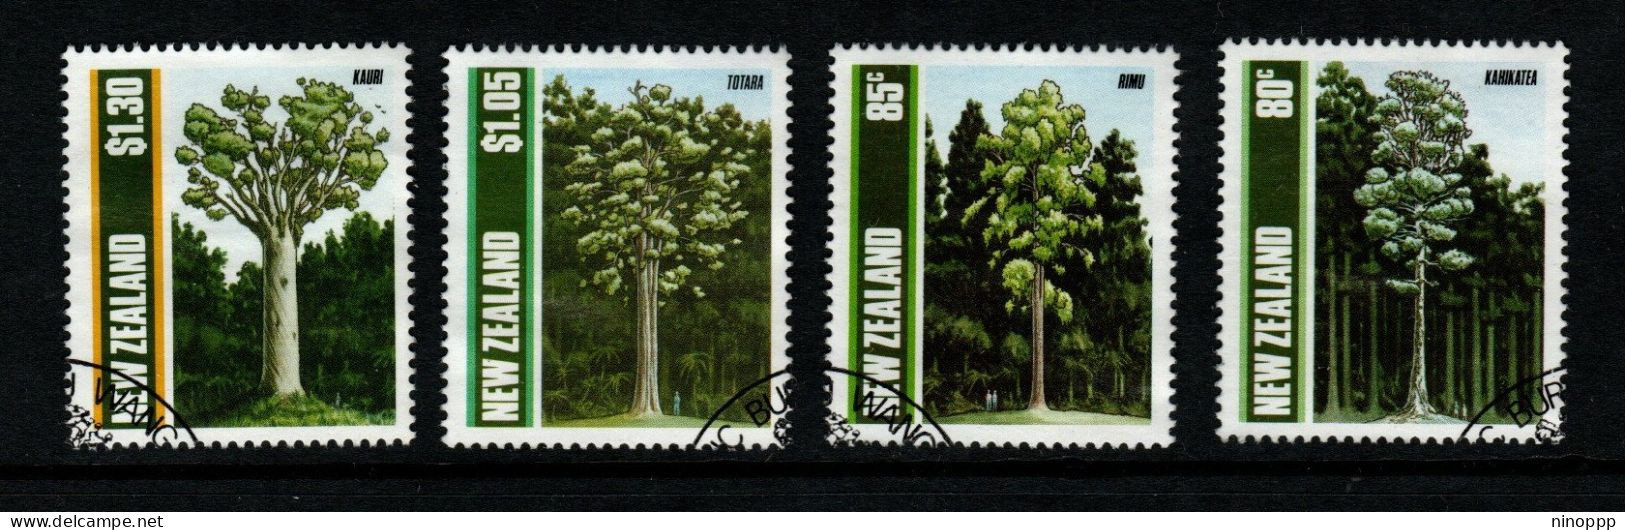 New Zealand SG 1511-14  1989 Trees,used - Gebruikt